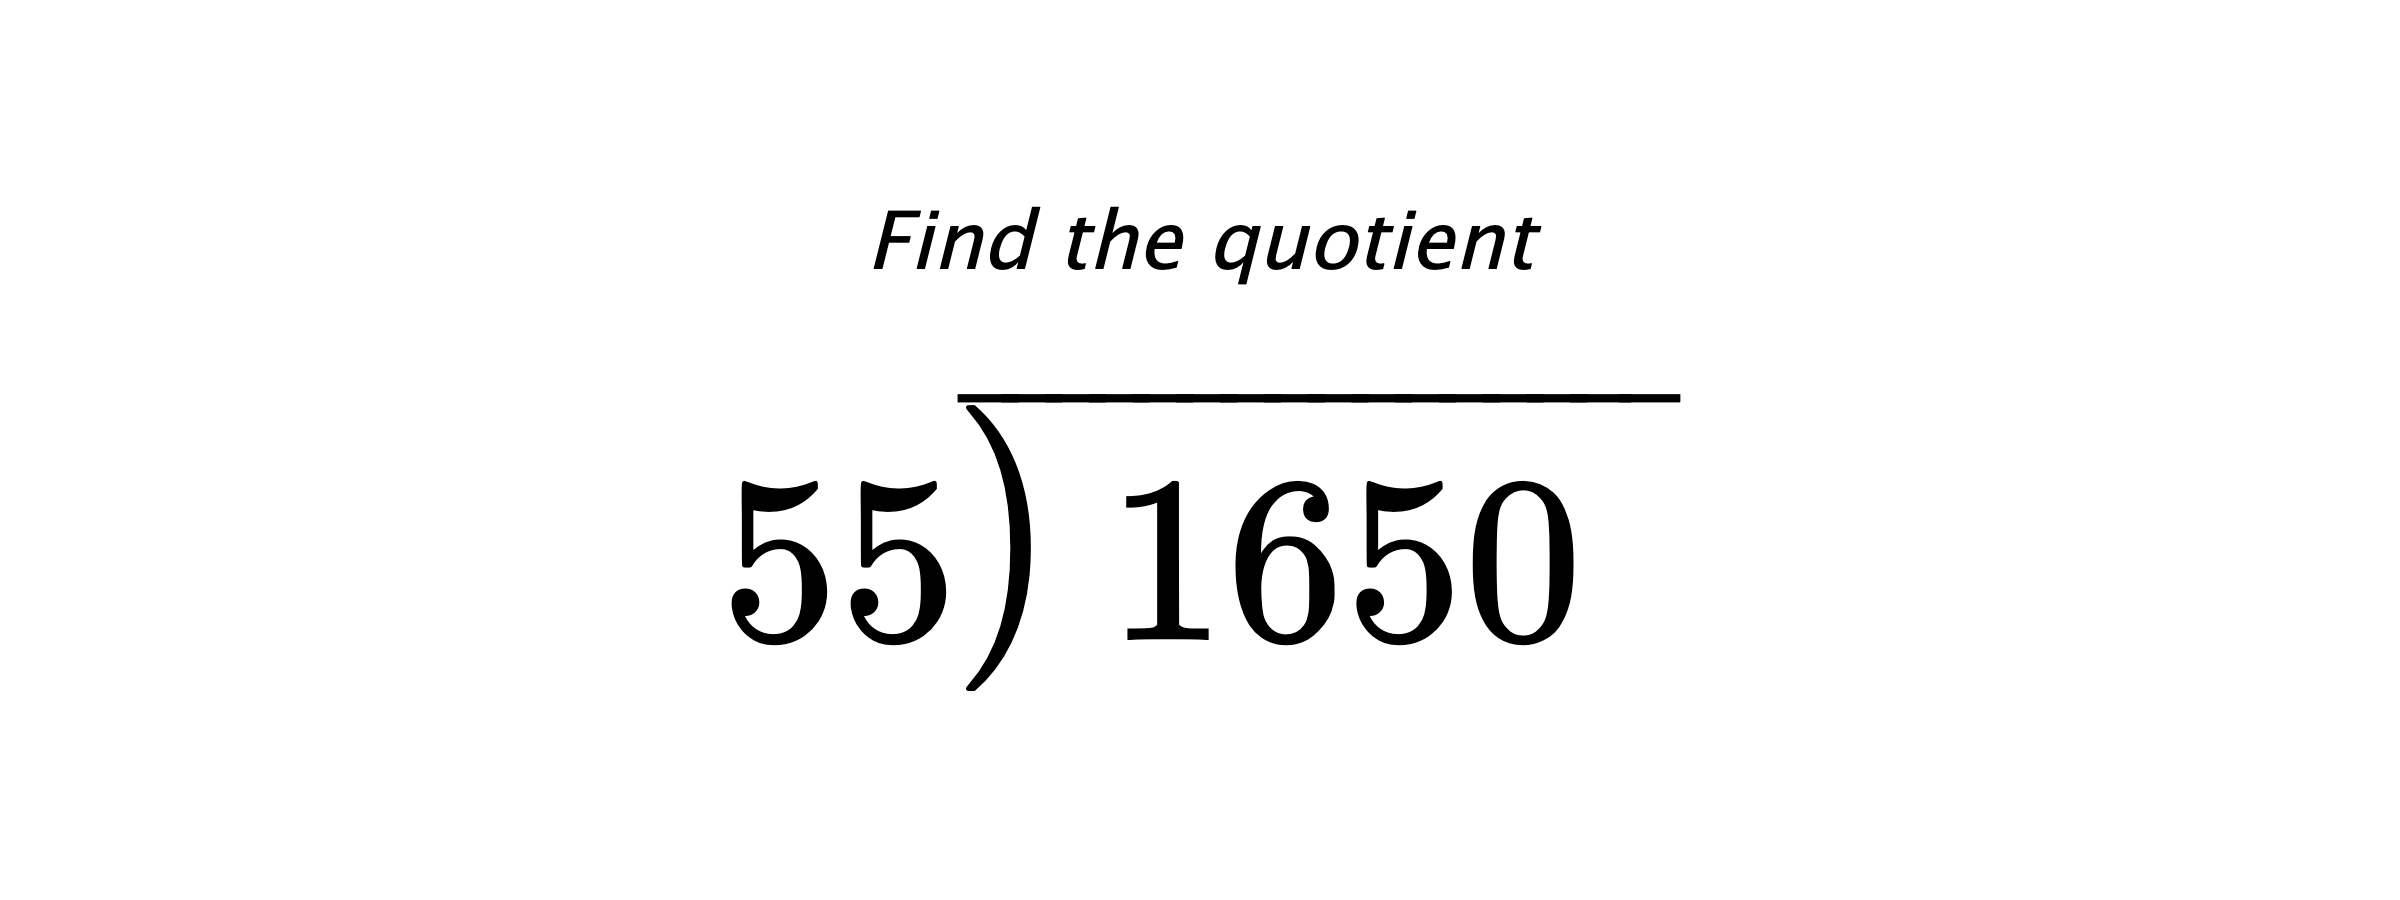 Find the quotient $ 55{\overline{\smash{\raise.3ex\hbox{$\big)$}}\,1650\phantom{)}}} $